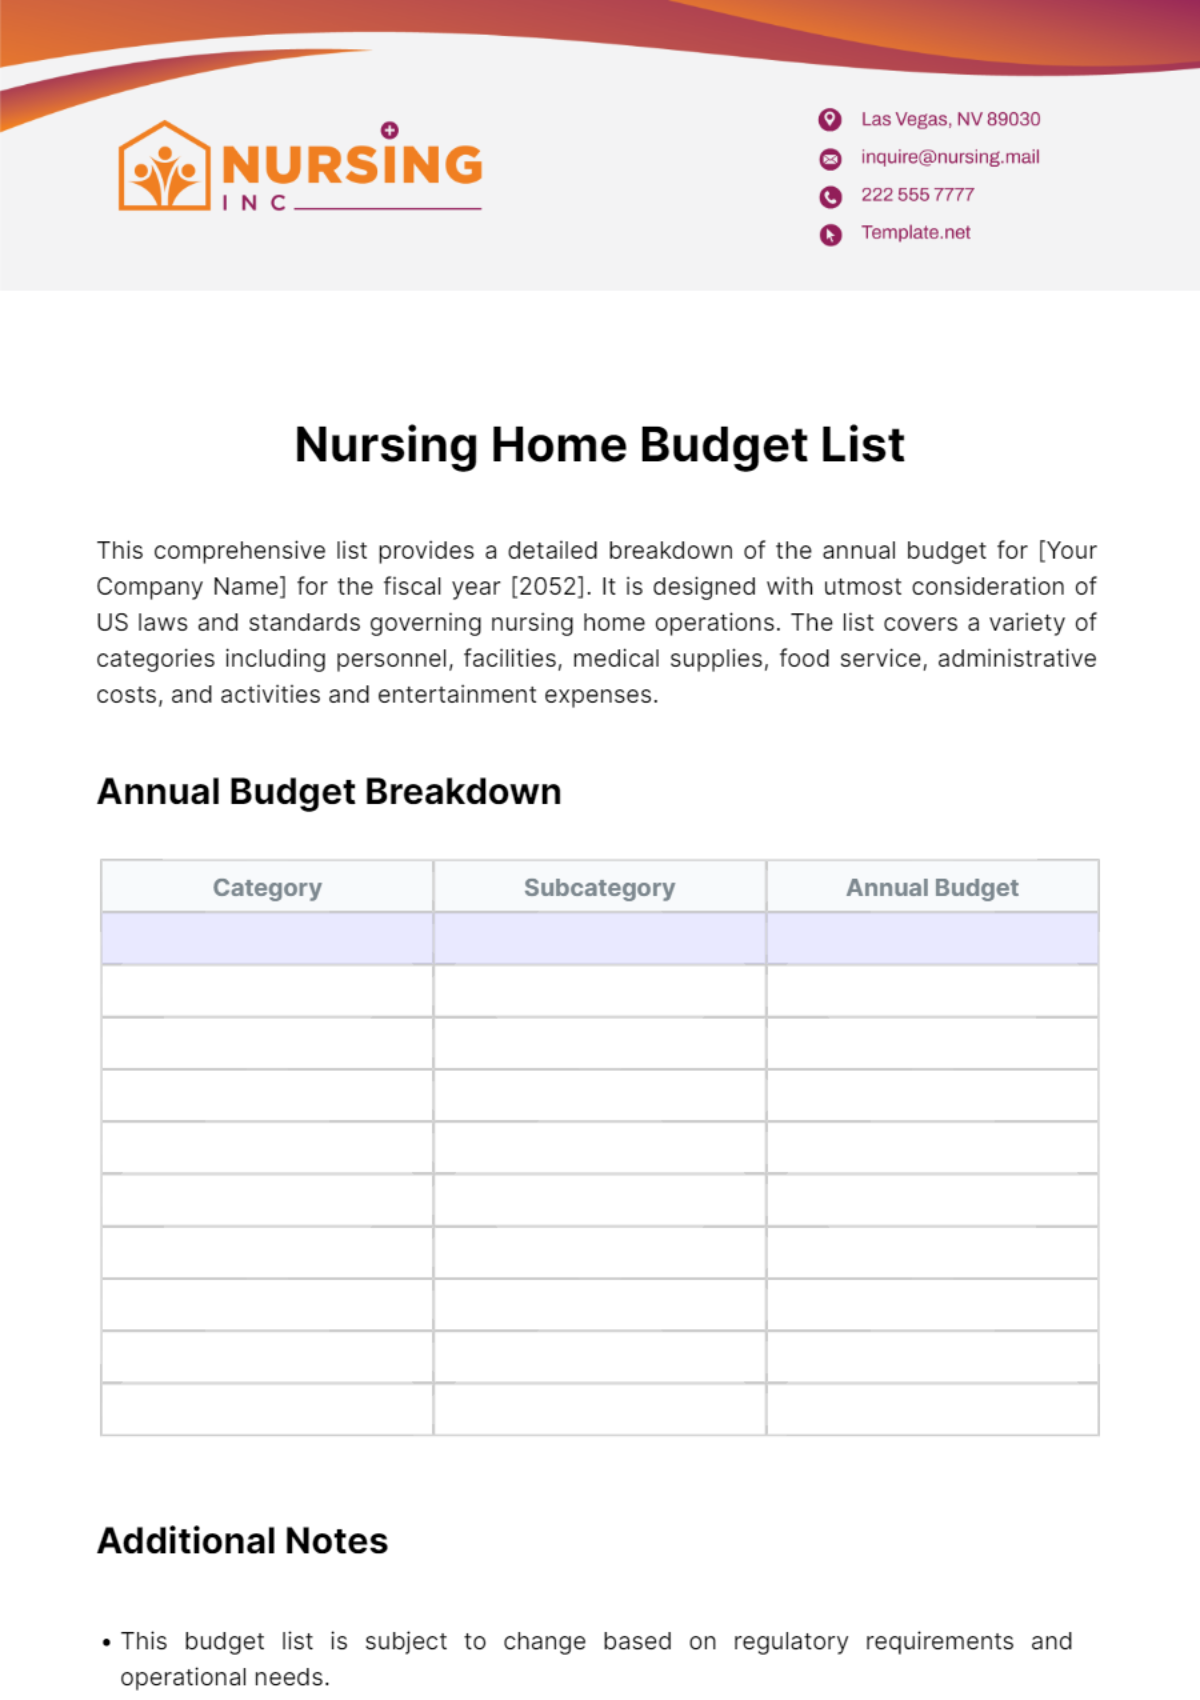 Nursing Home Budget List Template